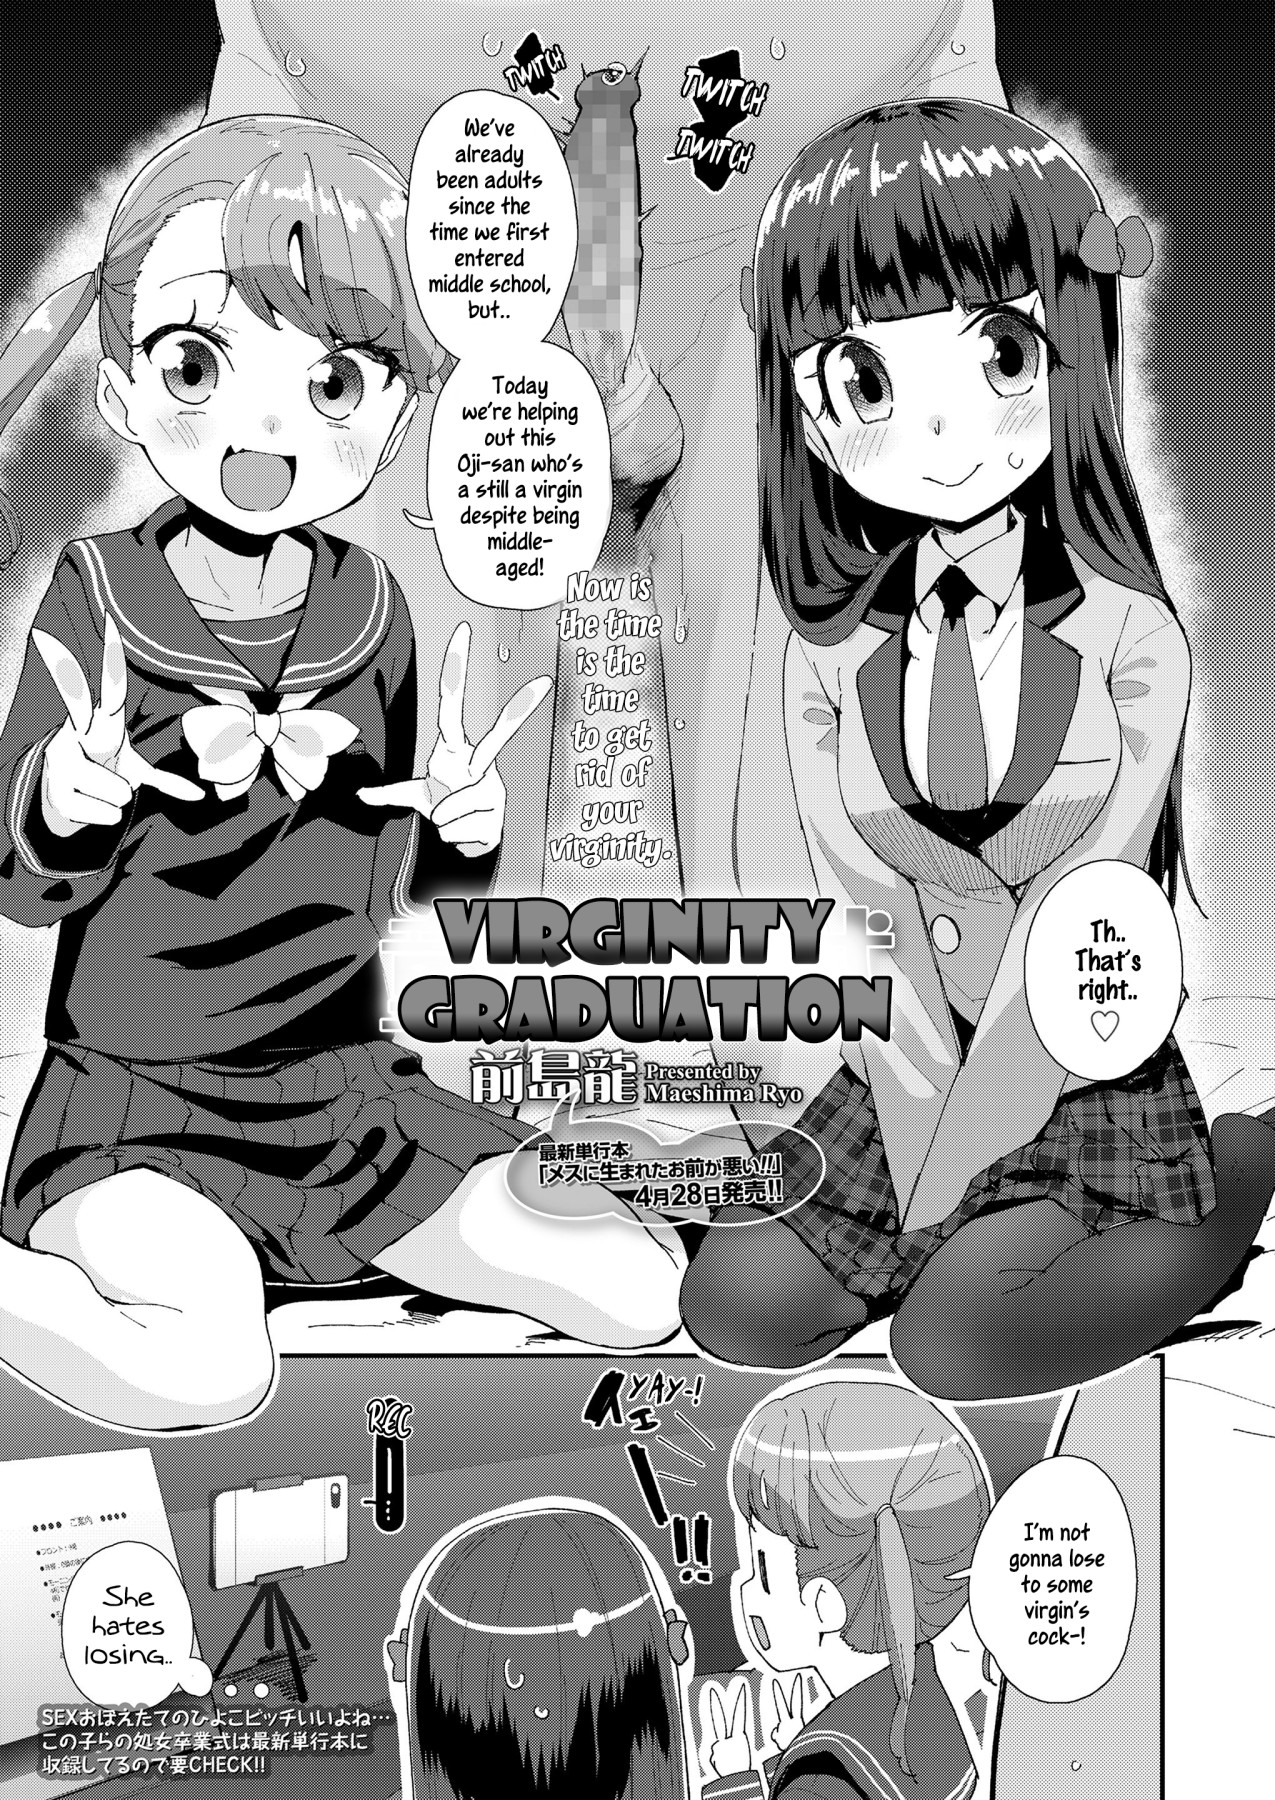 Hentai Manga Comic-Virginity Graduation 2-Read-1